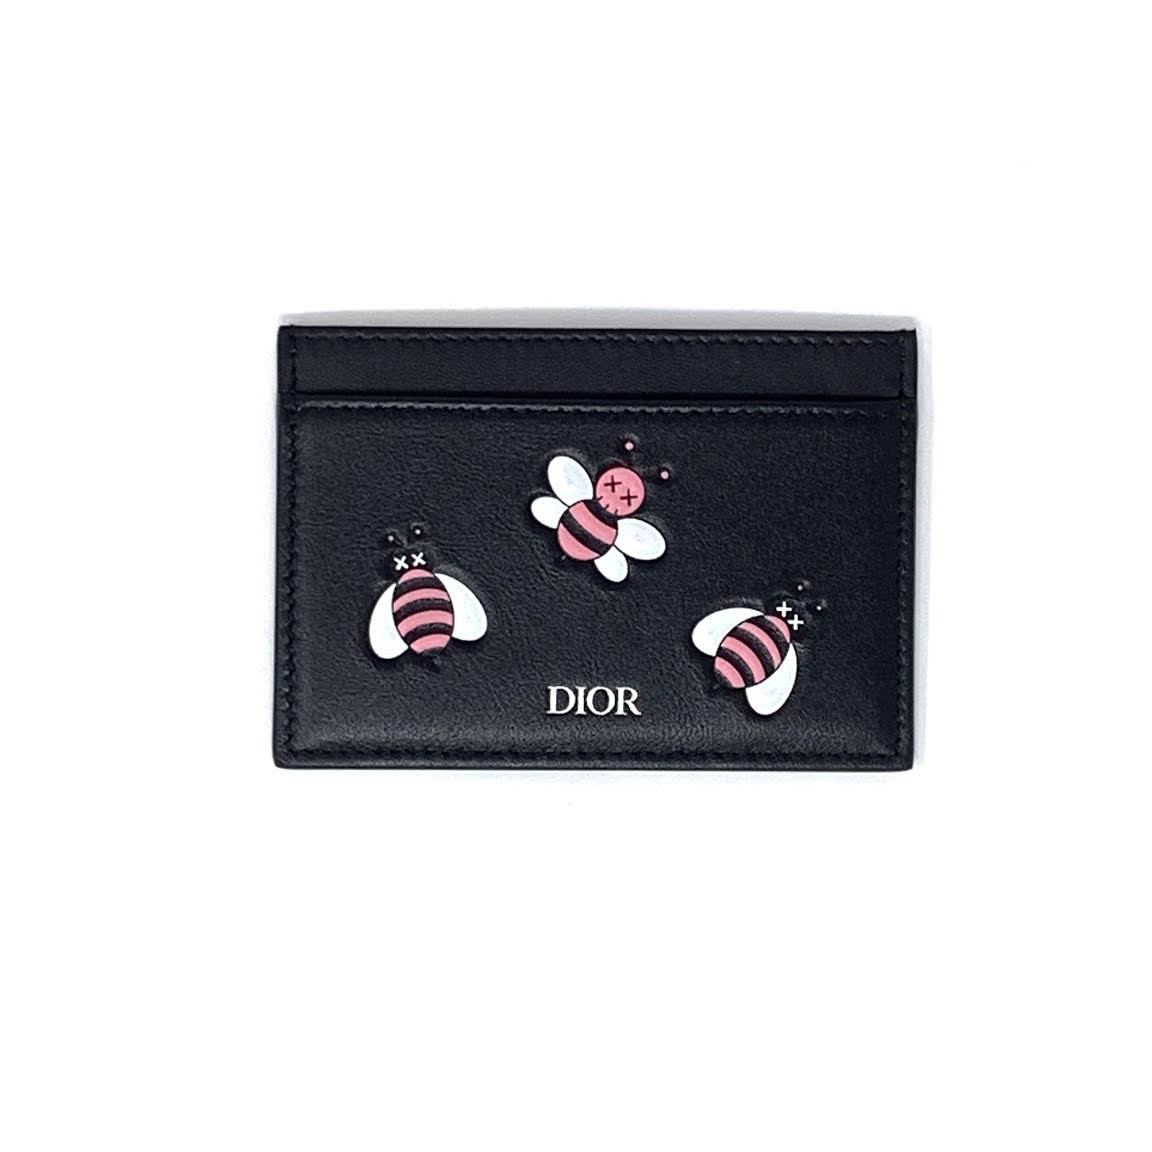 dior kaws card holder